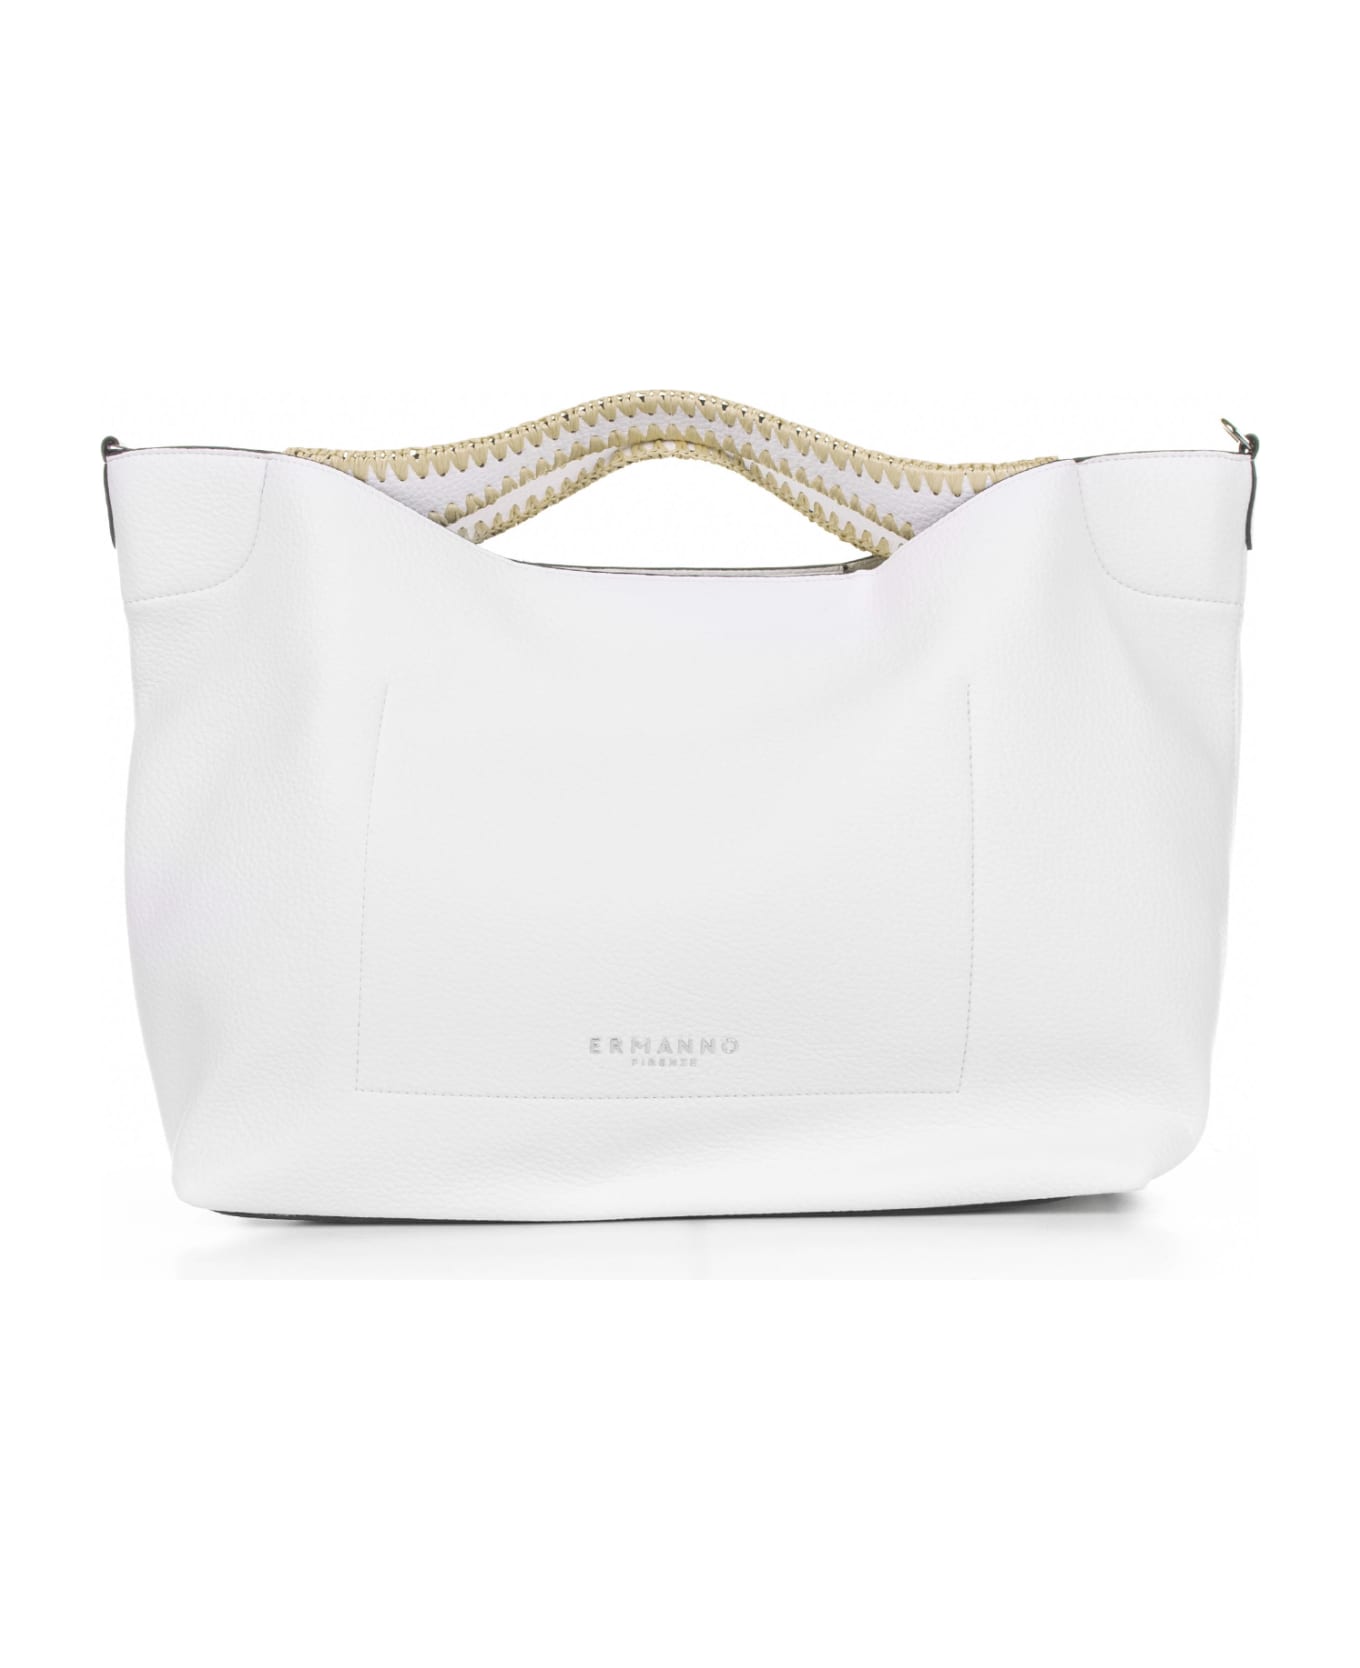 Ermanno Scervino Rachele Large White Leather Handbag - BIANCO